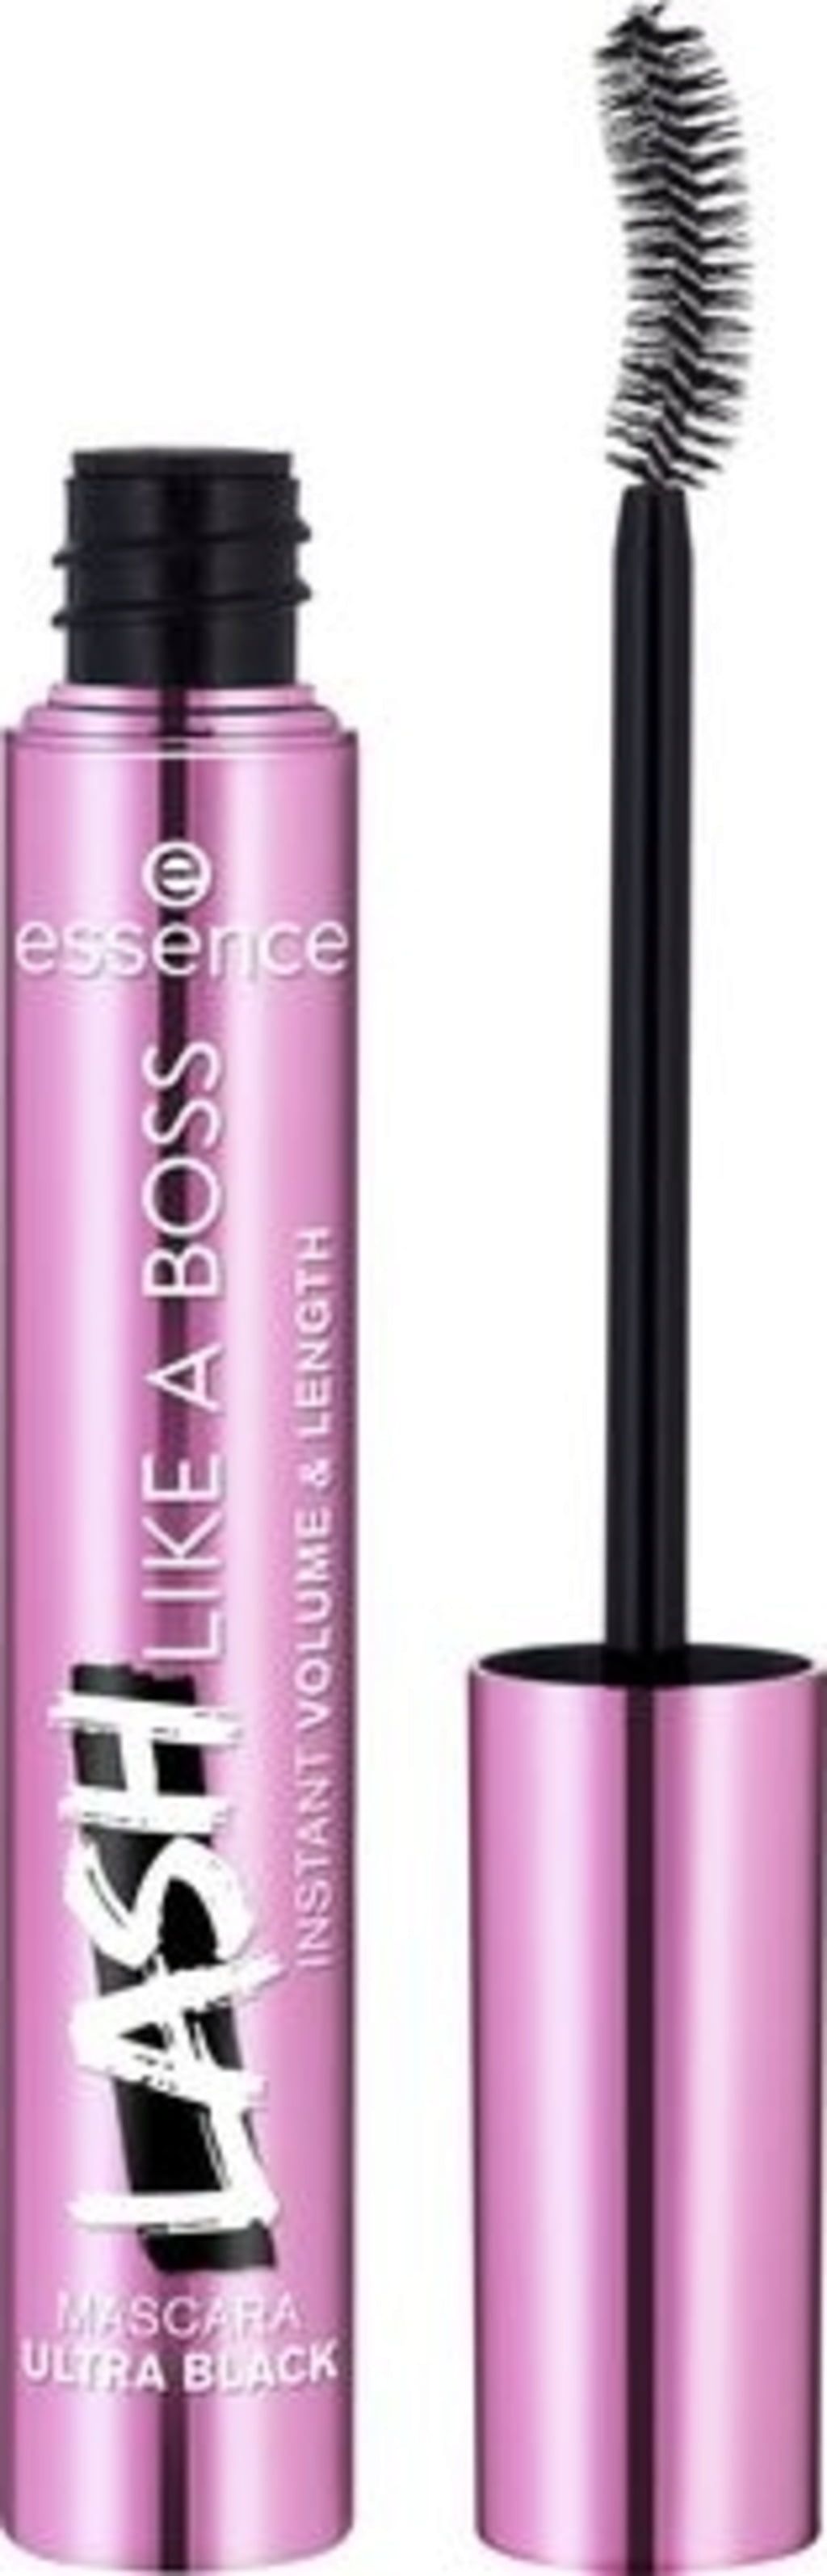 essence Lash Like A Boss Instant Volume & Length Mascara Ultra Black –  House of Cosmetics